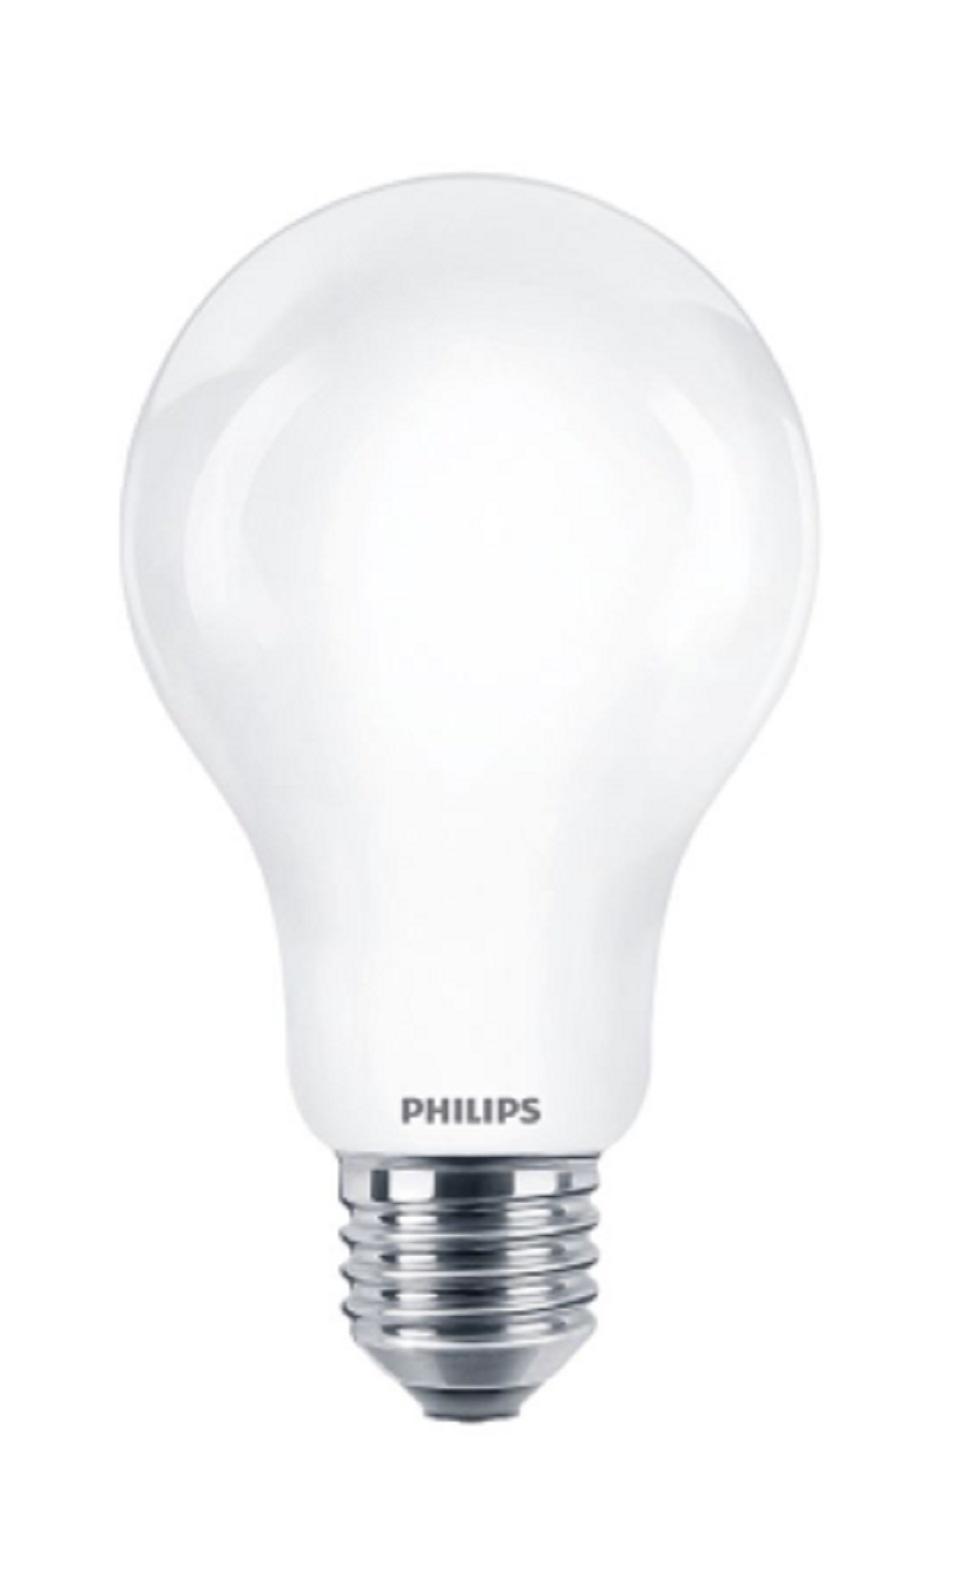 philips philips corepro lampada ledbulbnd 120w e27 a67 865 incaled120865g2